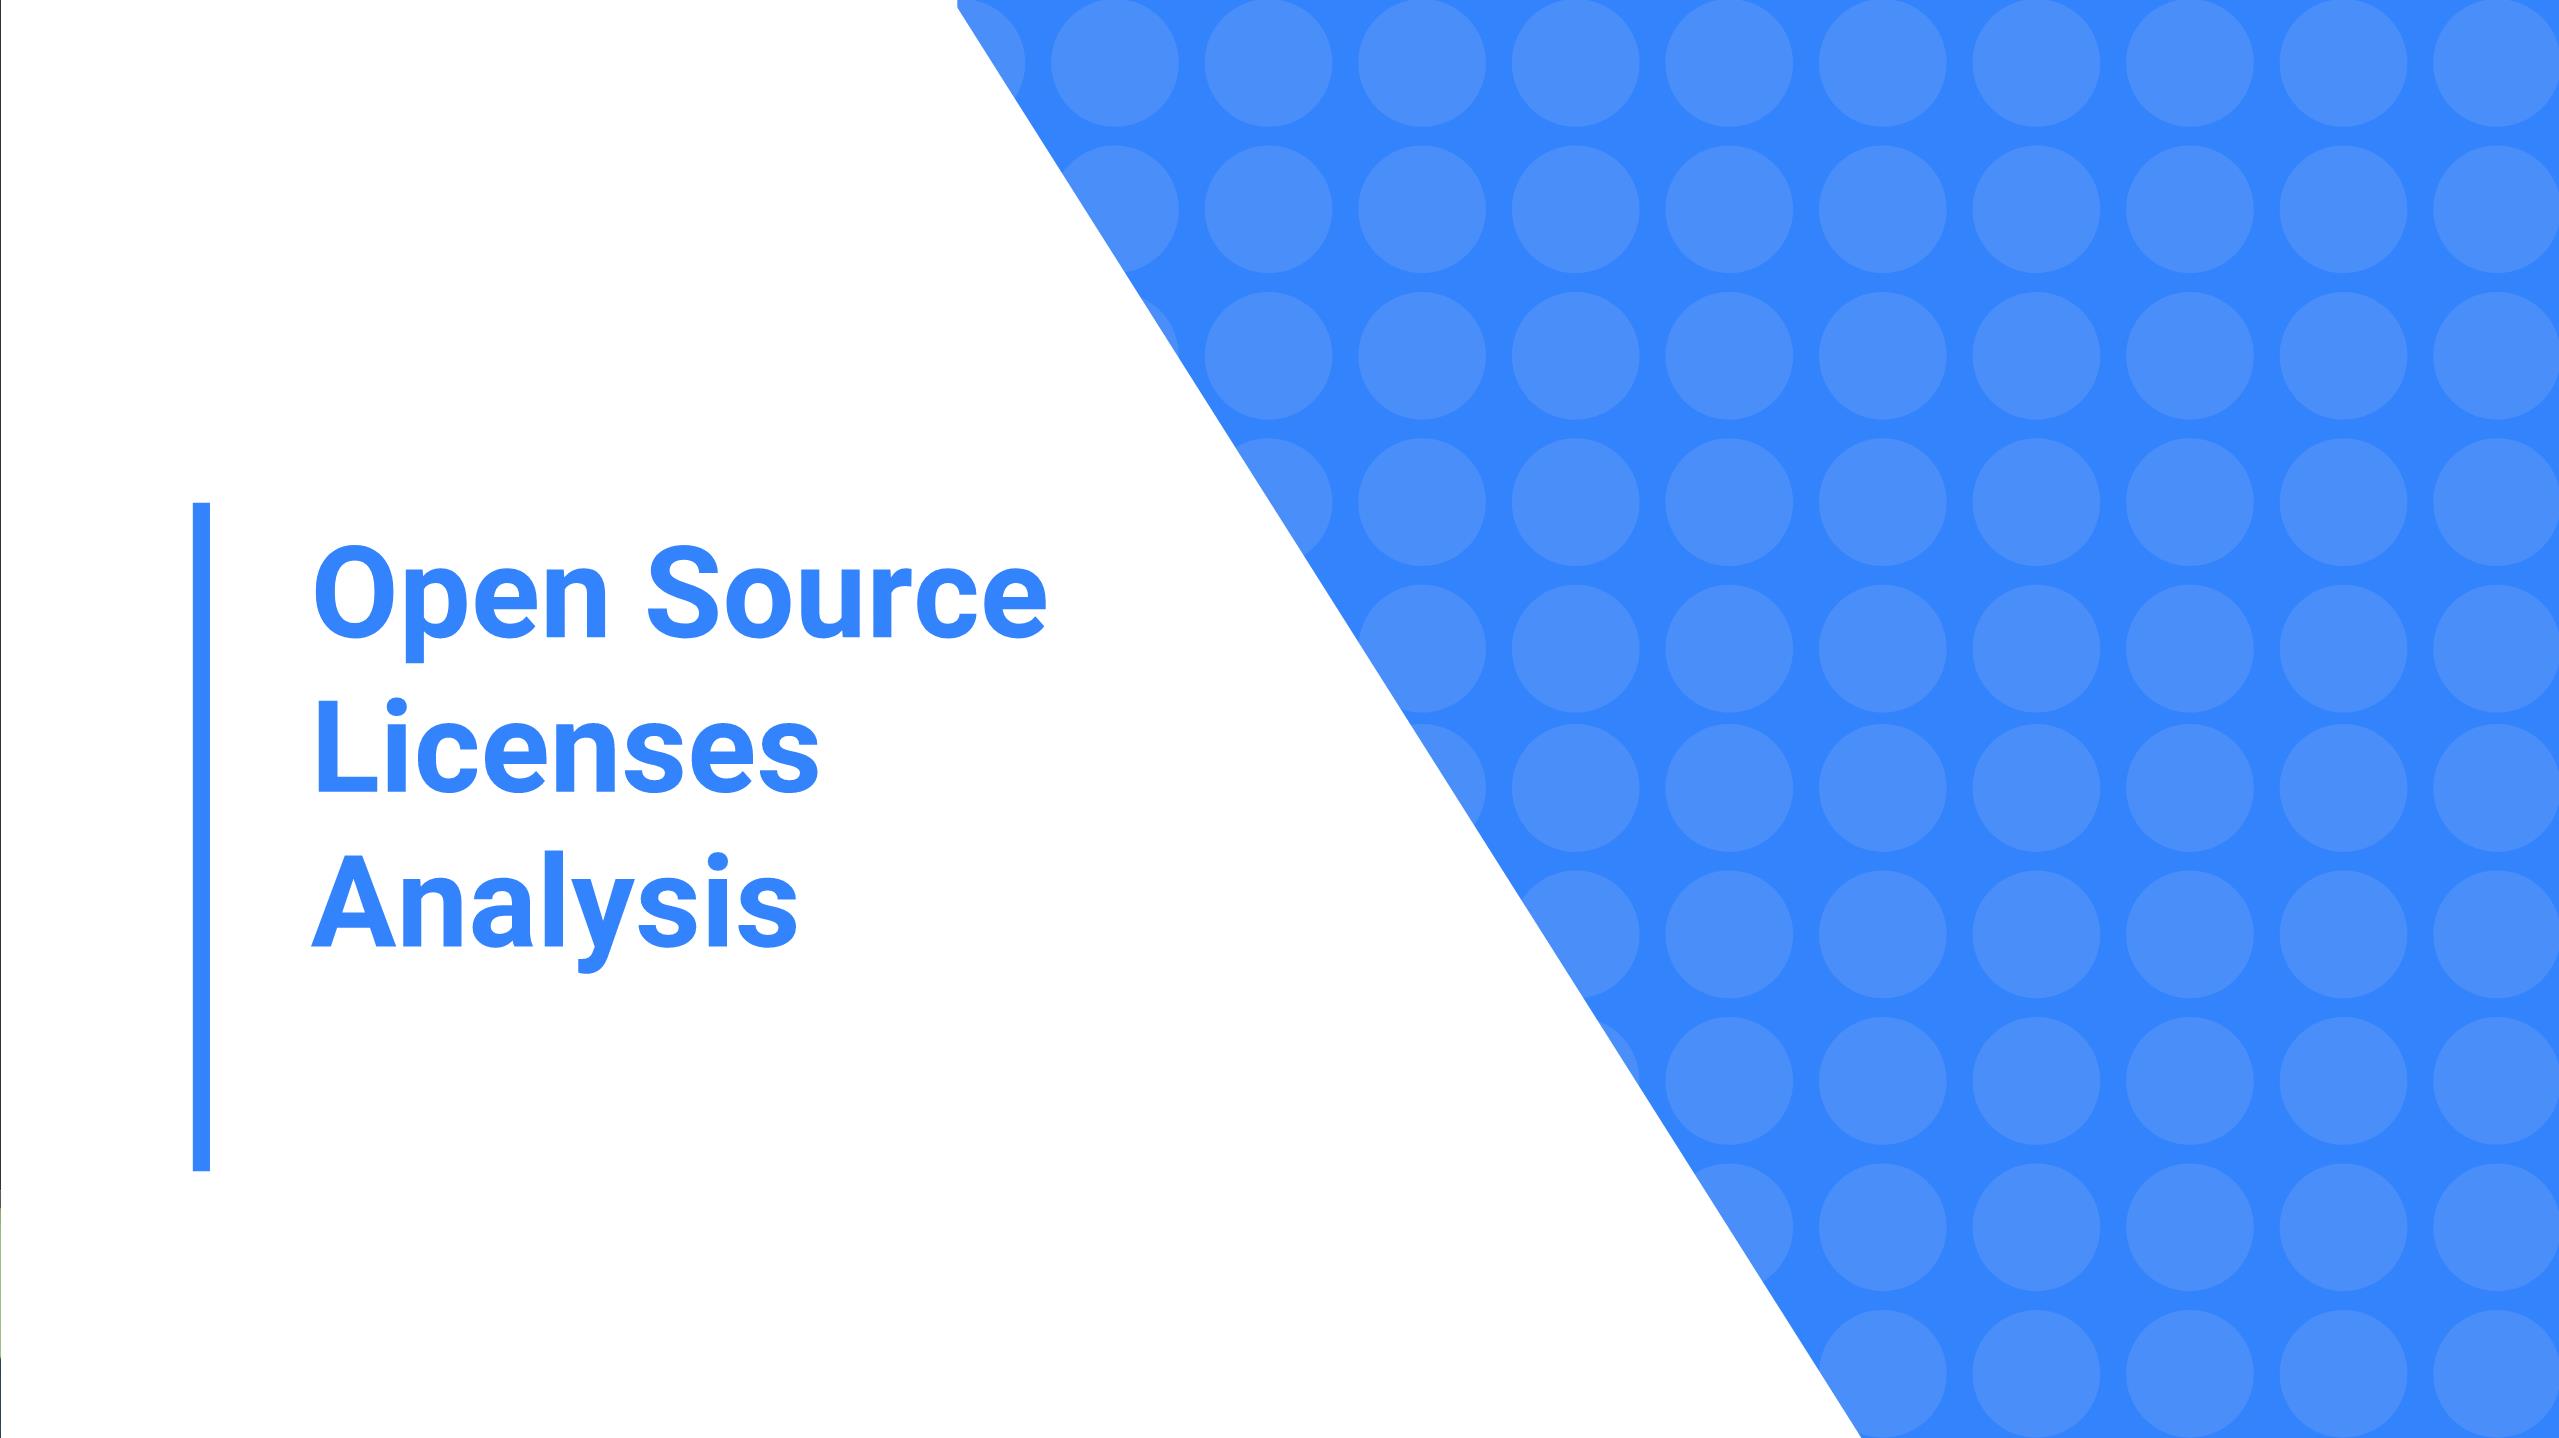 Alat presentasi khusus untuk analisis lisensi software umum.